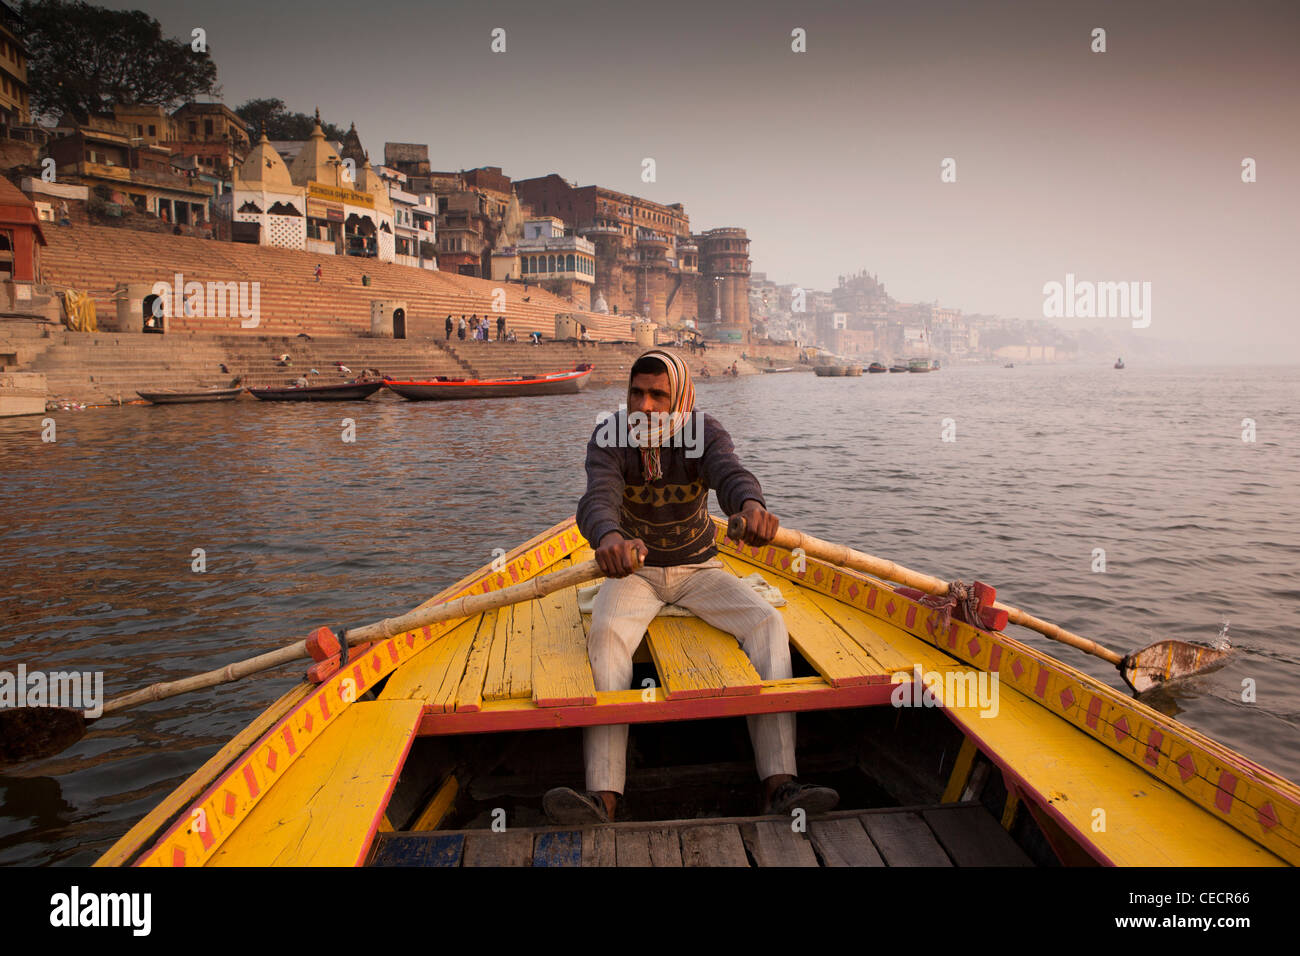 India, Uttar Pradesh, Varanasi, man rowing boat taking tourists on dawn tour on River Ganges Stock Photo